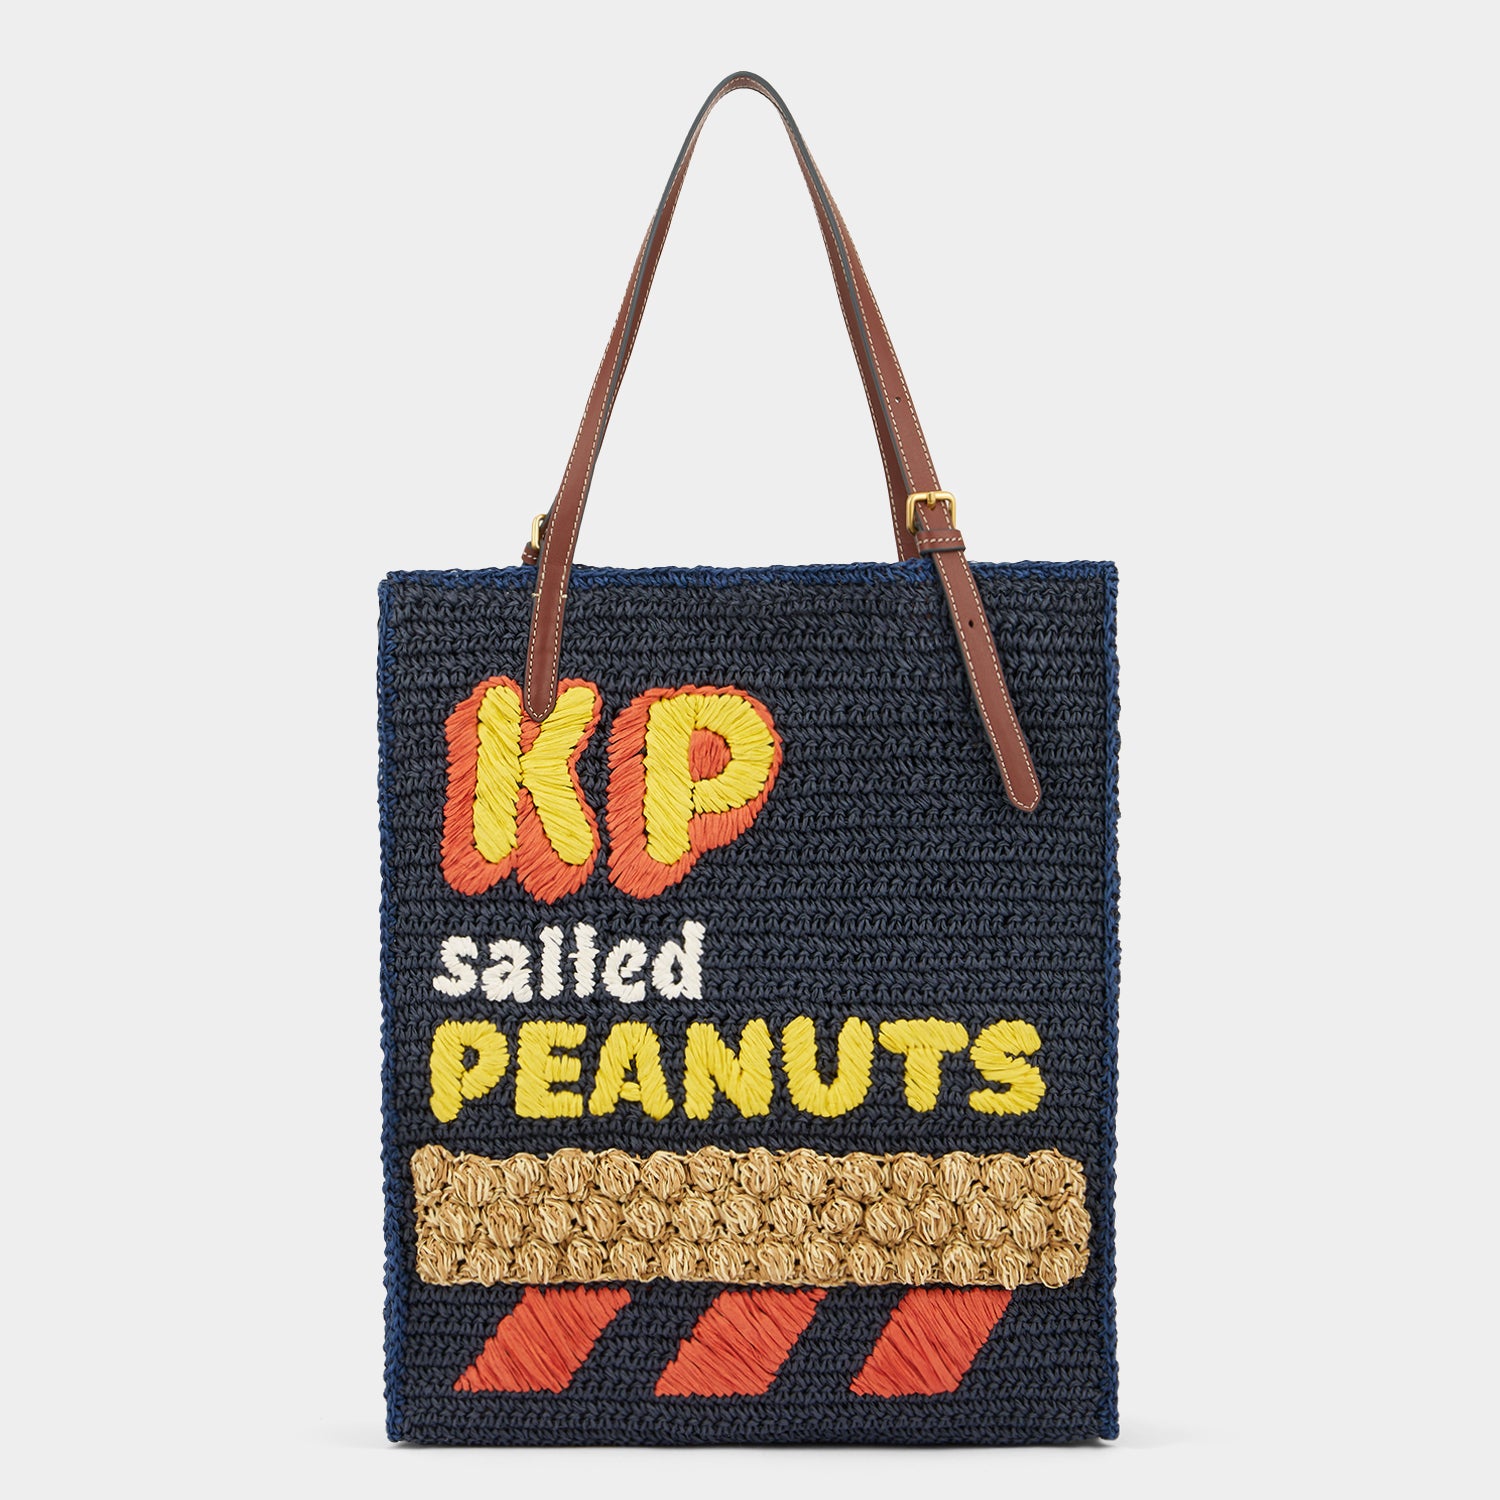 「KP Peanuts」 トート